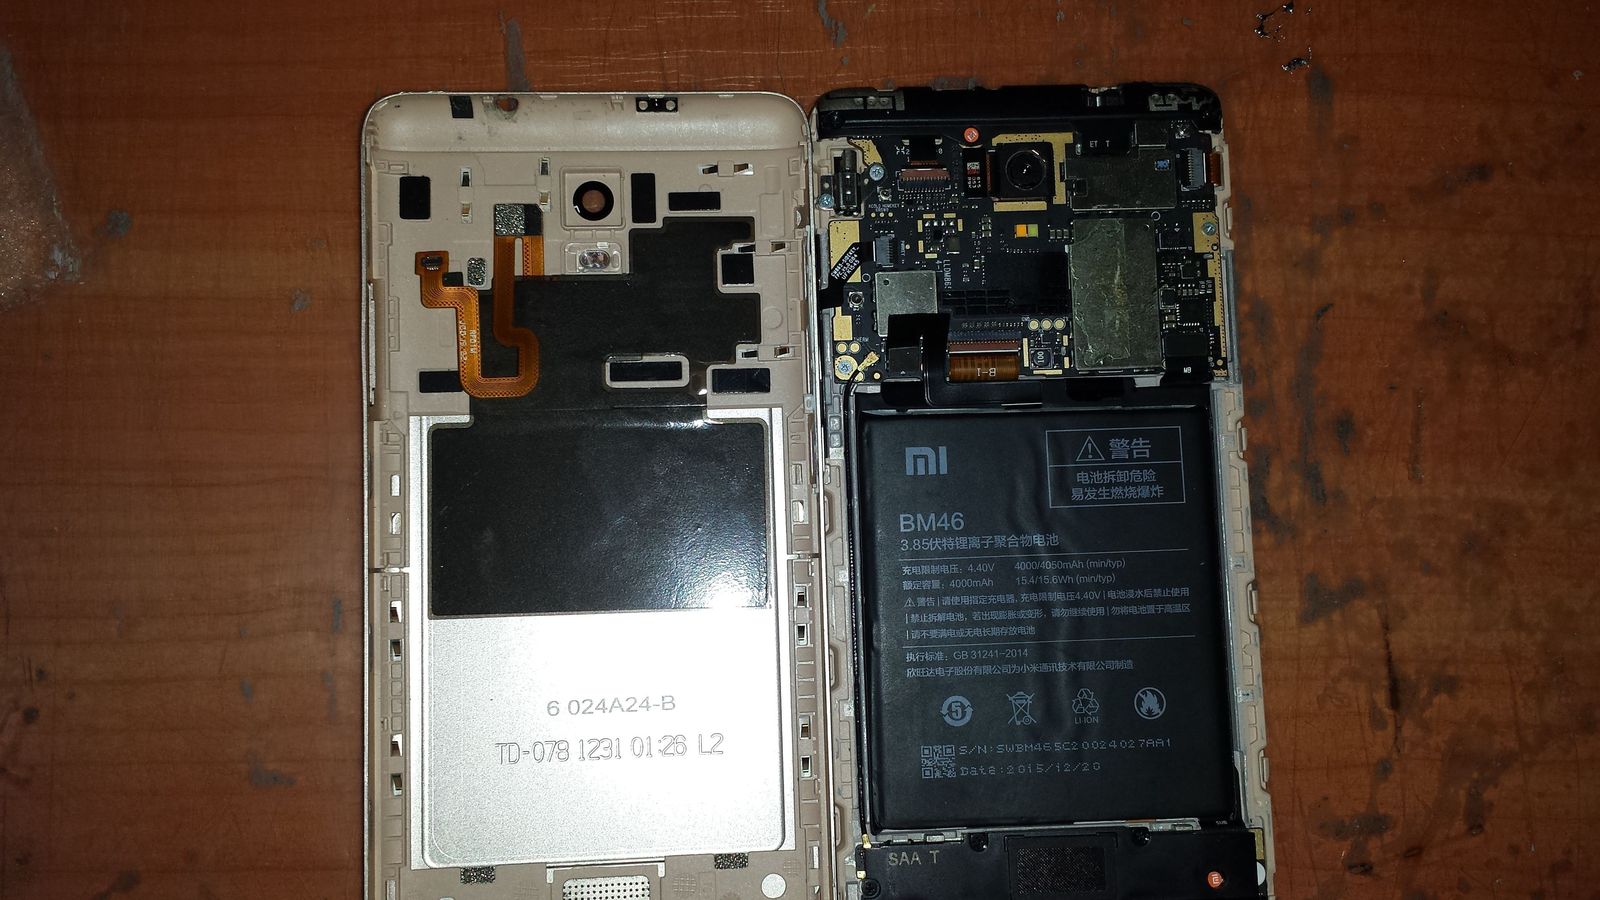 Xiaomi Redmi Note 3 won't turn on - My, Ремонт телефона, Hobby, Saint Petersburg, Republic of Belarus, Longpost